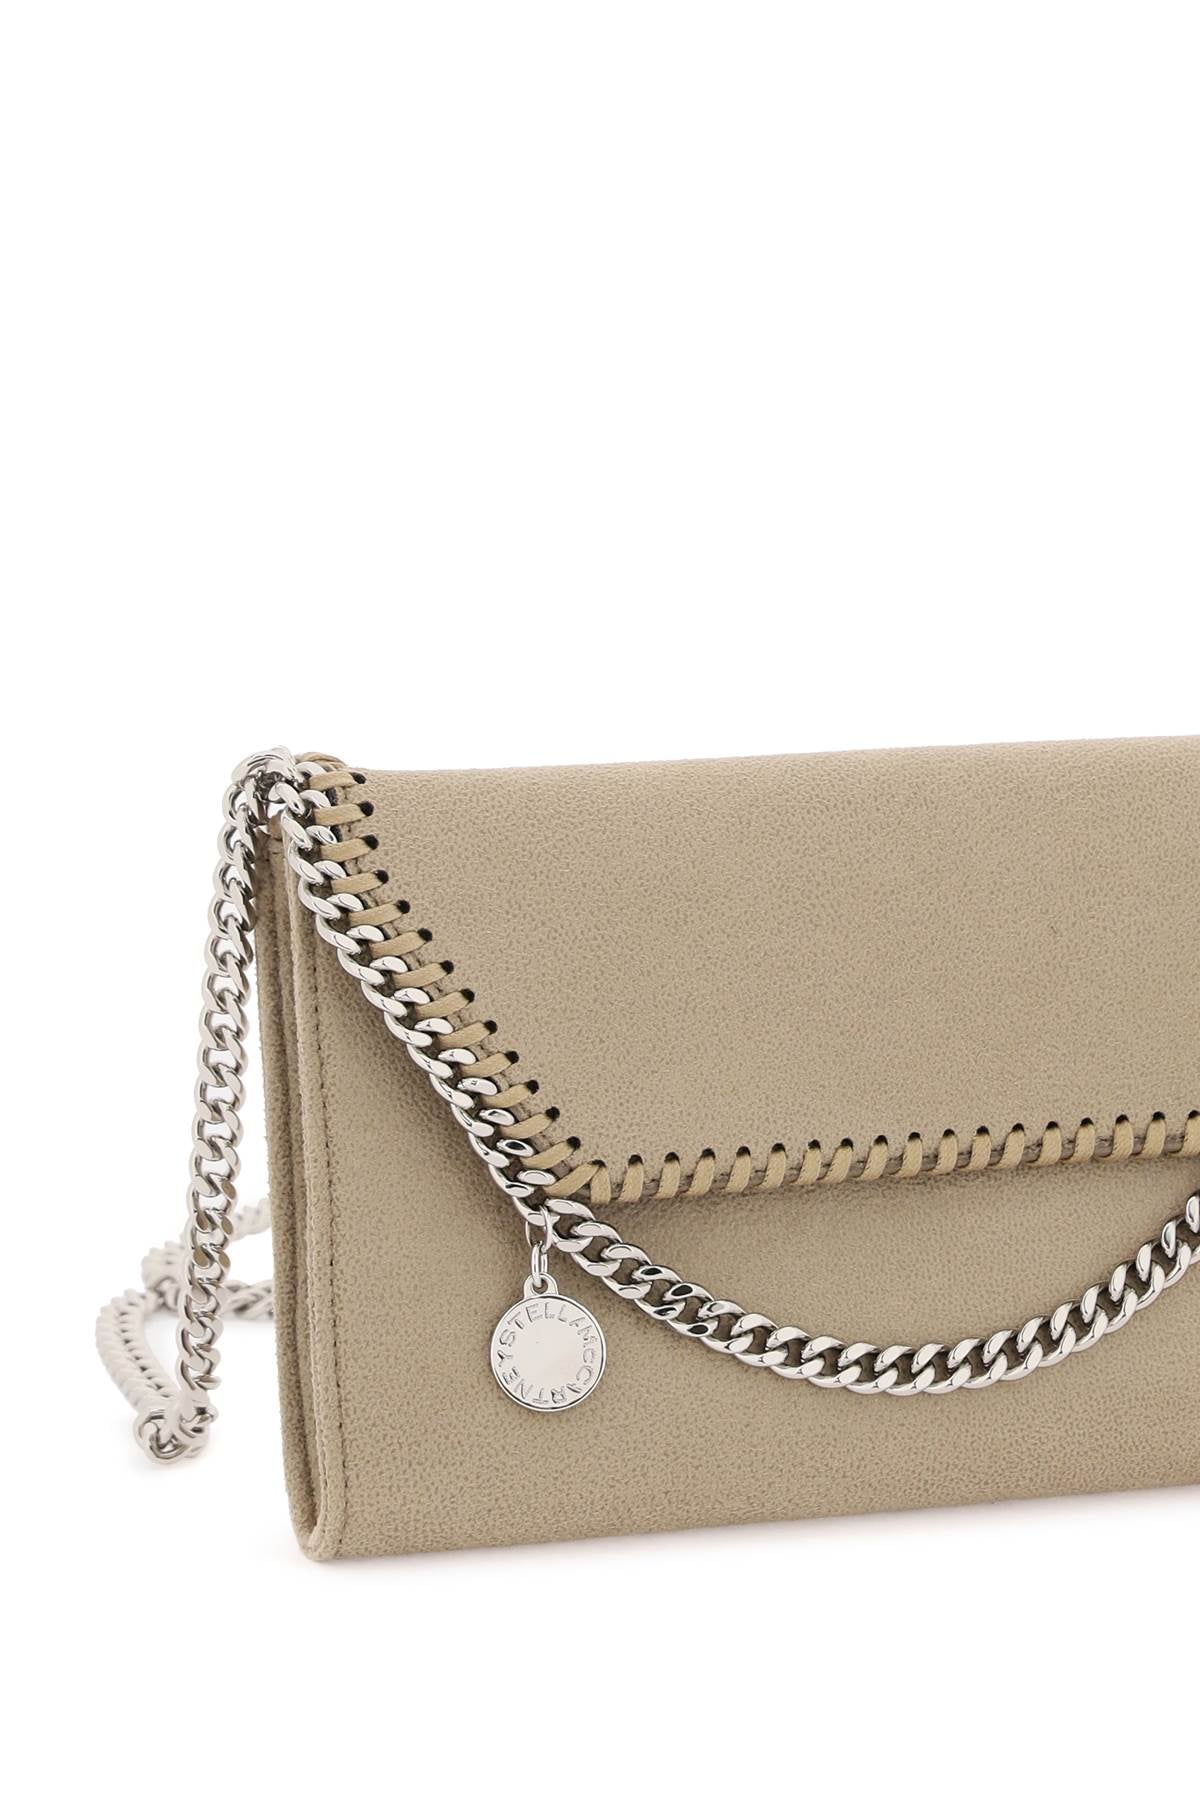 STELLA MCCARTNEY Tan Mini Crossbody Handbag with Silver Chain Detail and Vegan Leather